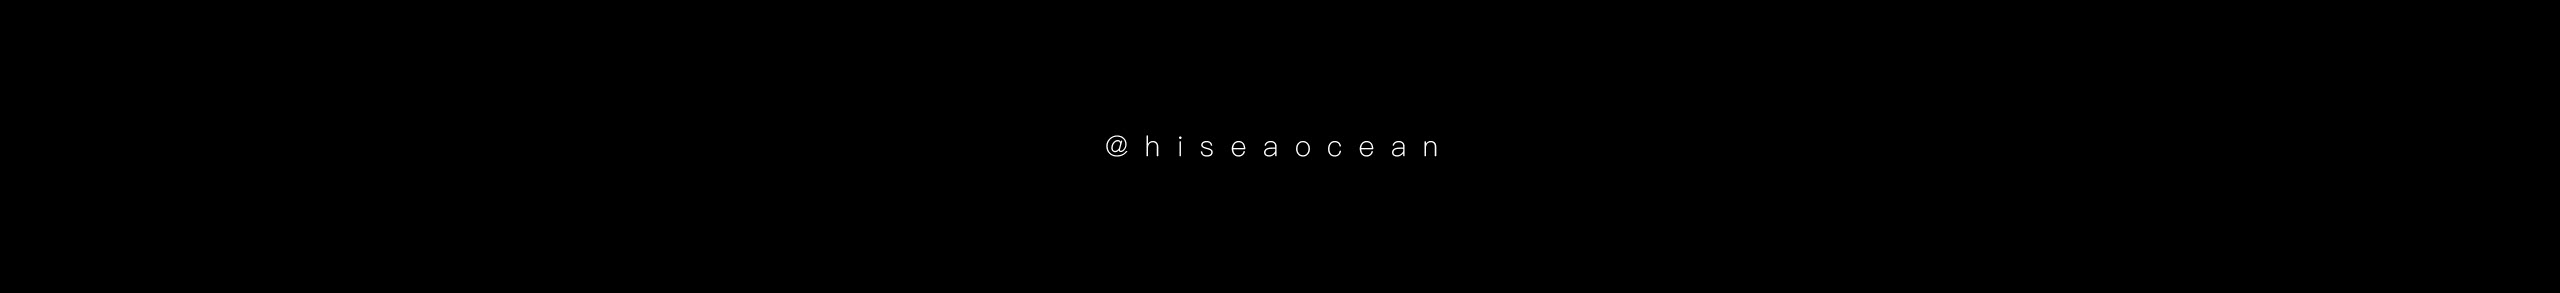 Баннер профиля hi seaocean